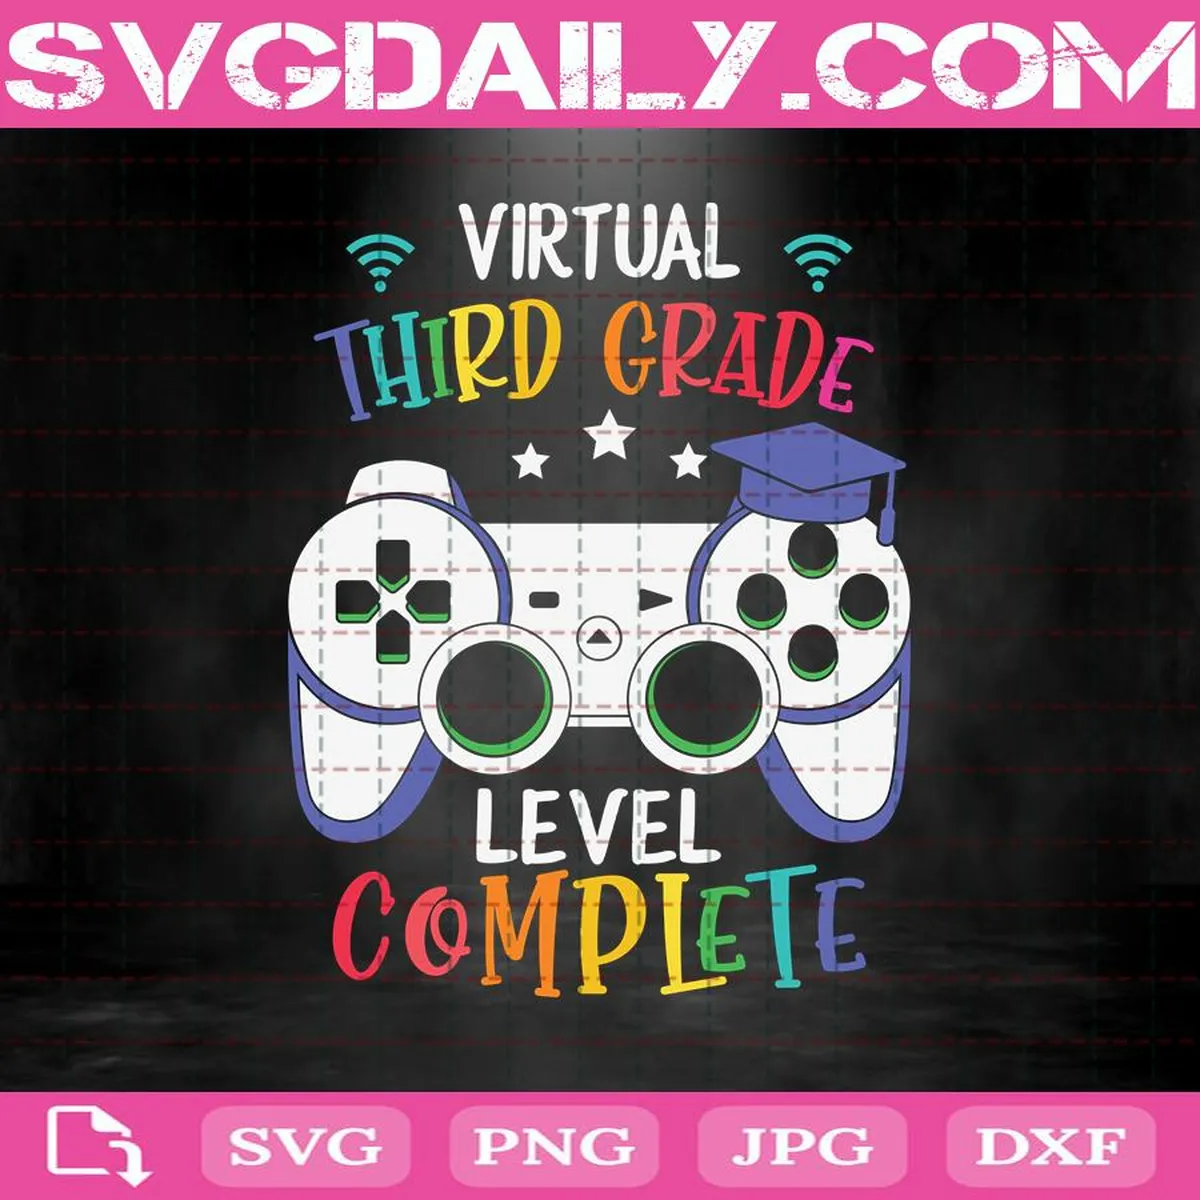 Virtual Third Grade Level Complete Svg, Third Grade Svg, Graduation Video Game Svg, Grade School Svg, Graduation Svg, Gamer Svg